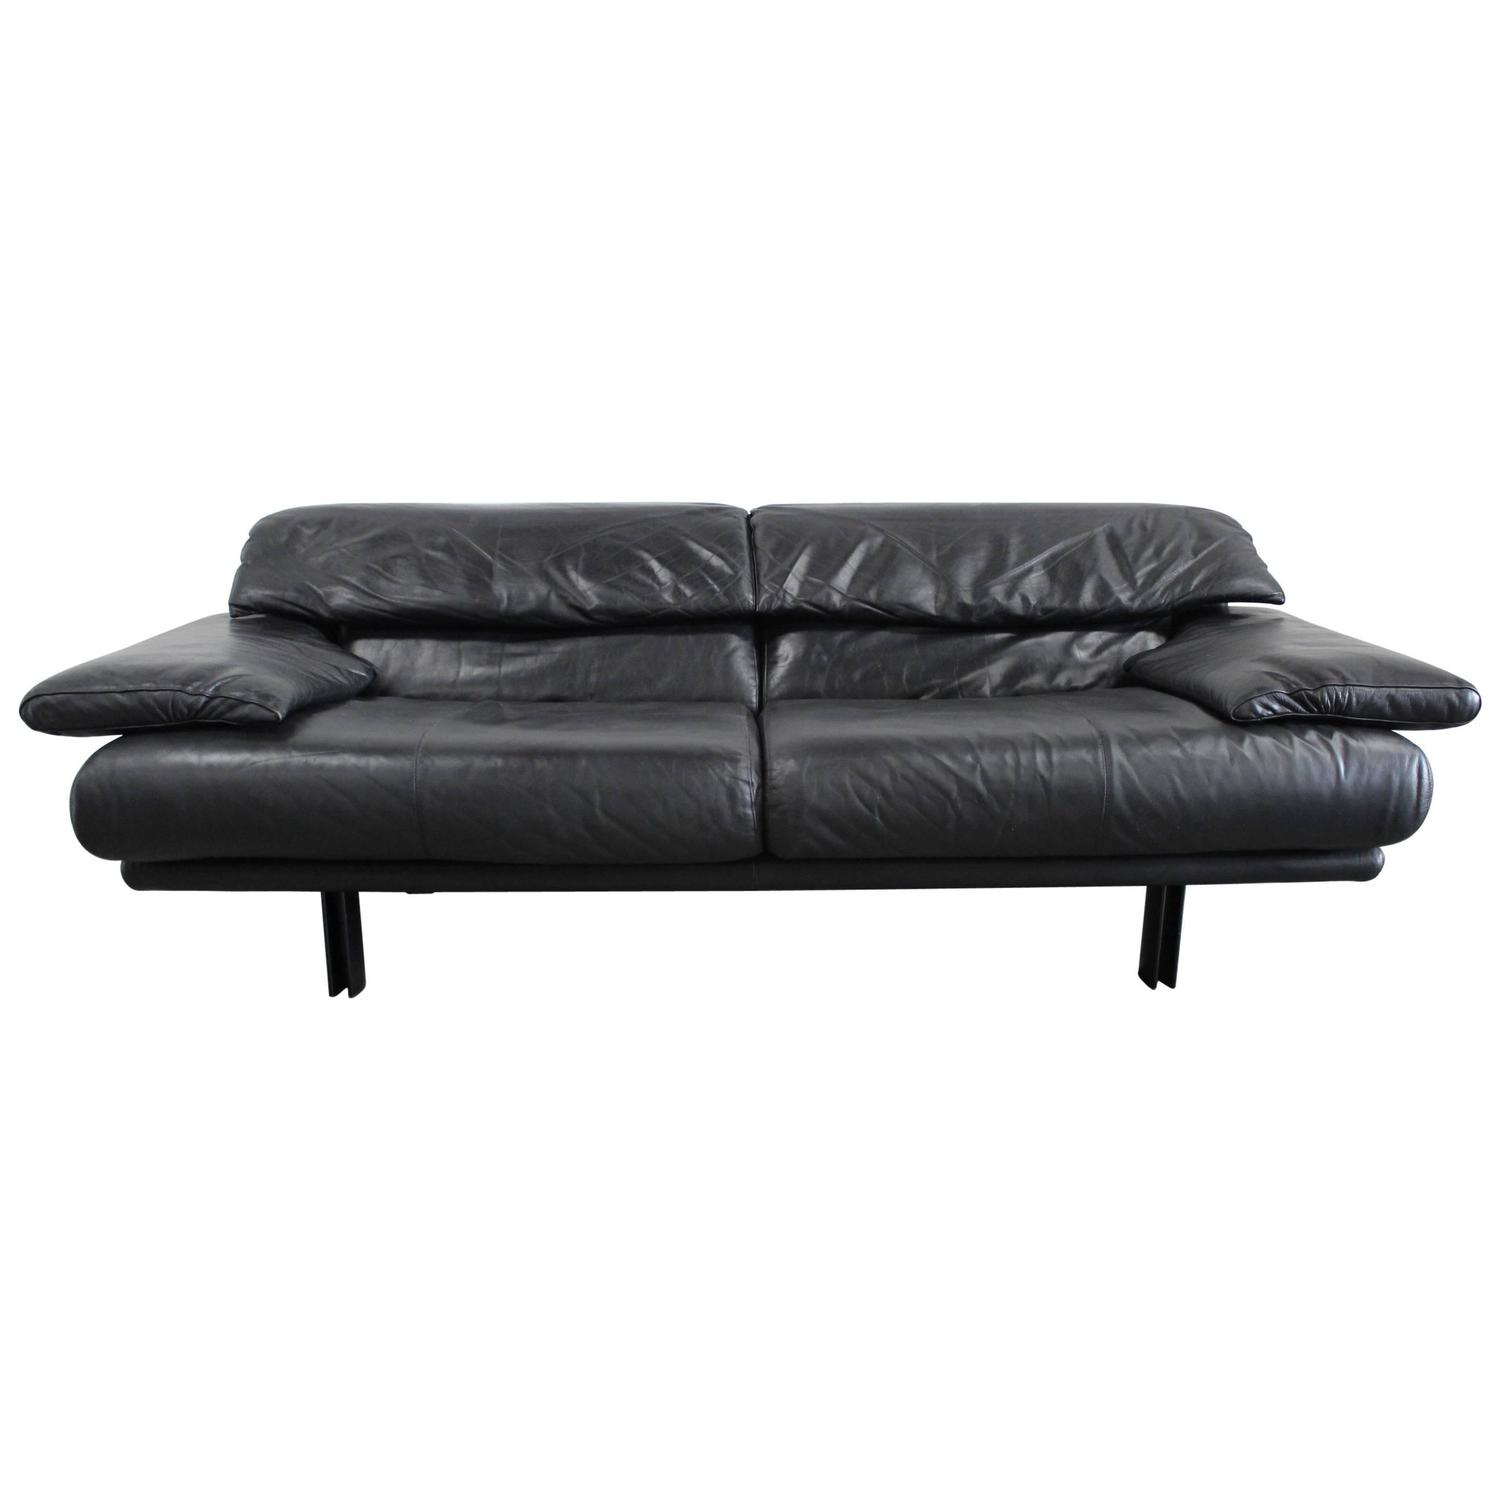 B&B Italia "Alanda" Two and a Half Seat Sofa in Black Leather by